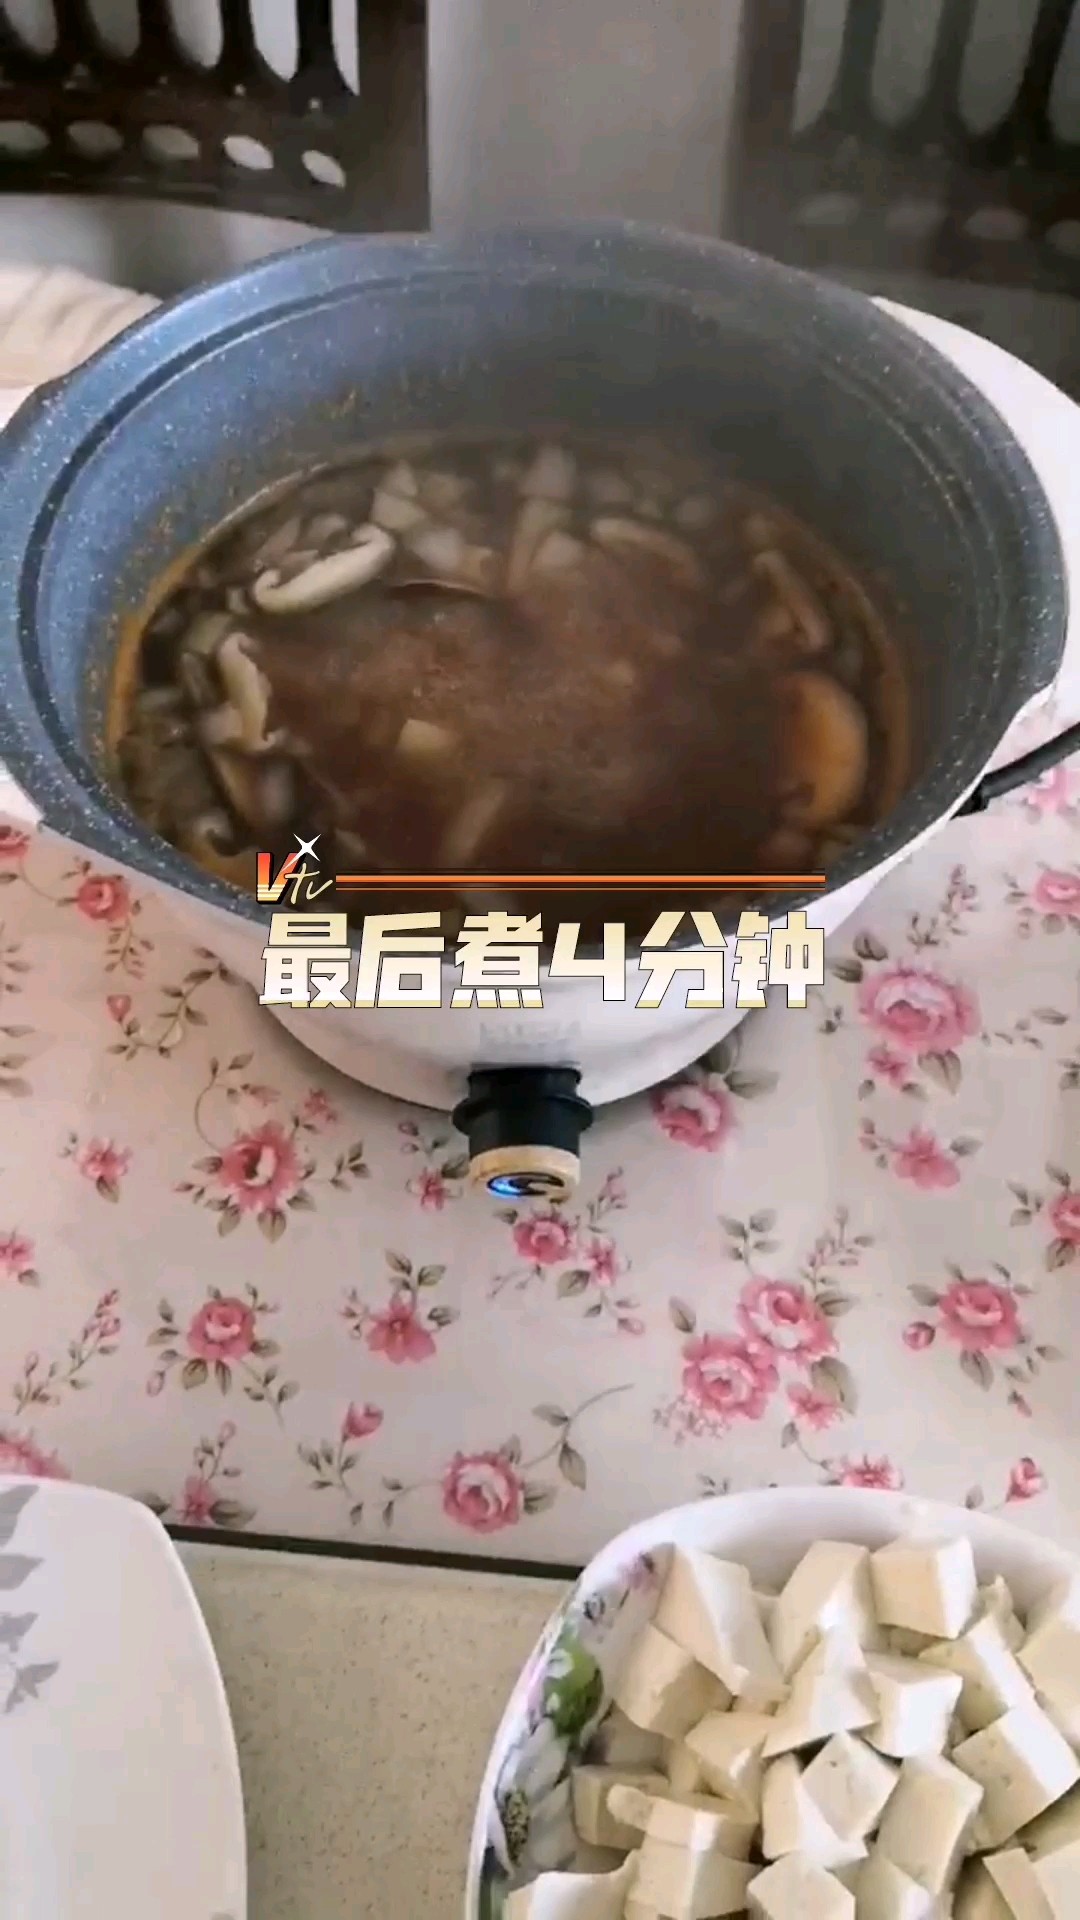 Delicious Korean Miso Soup recipe